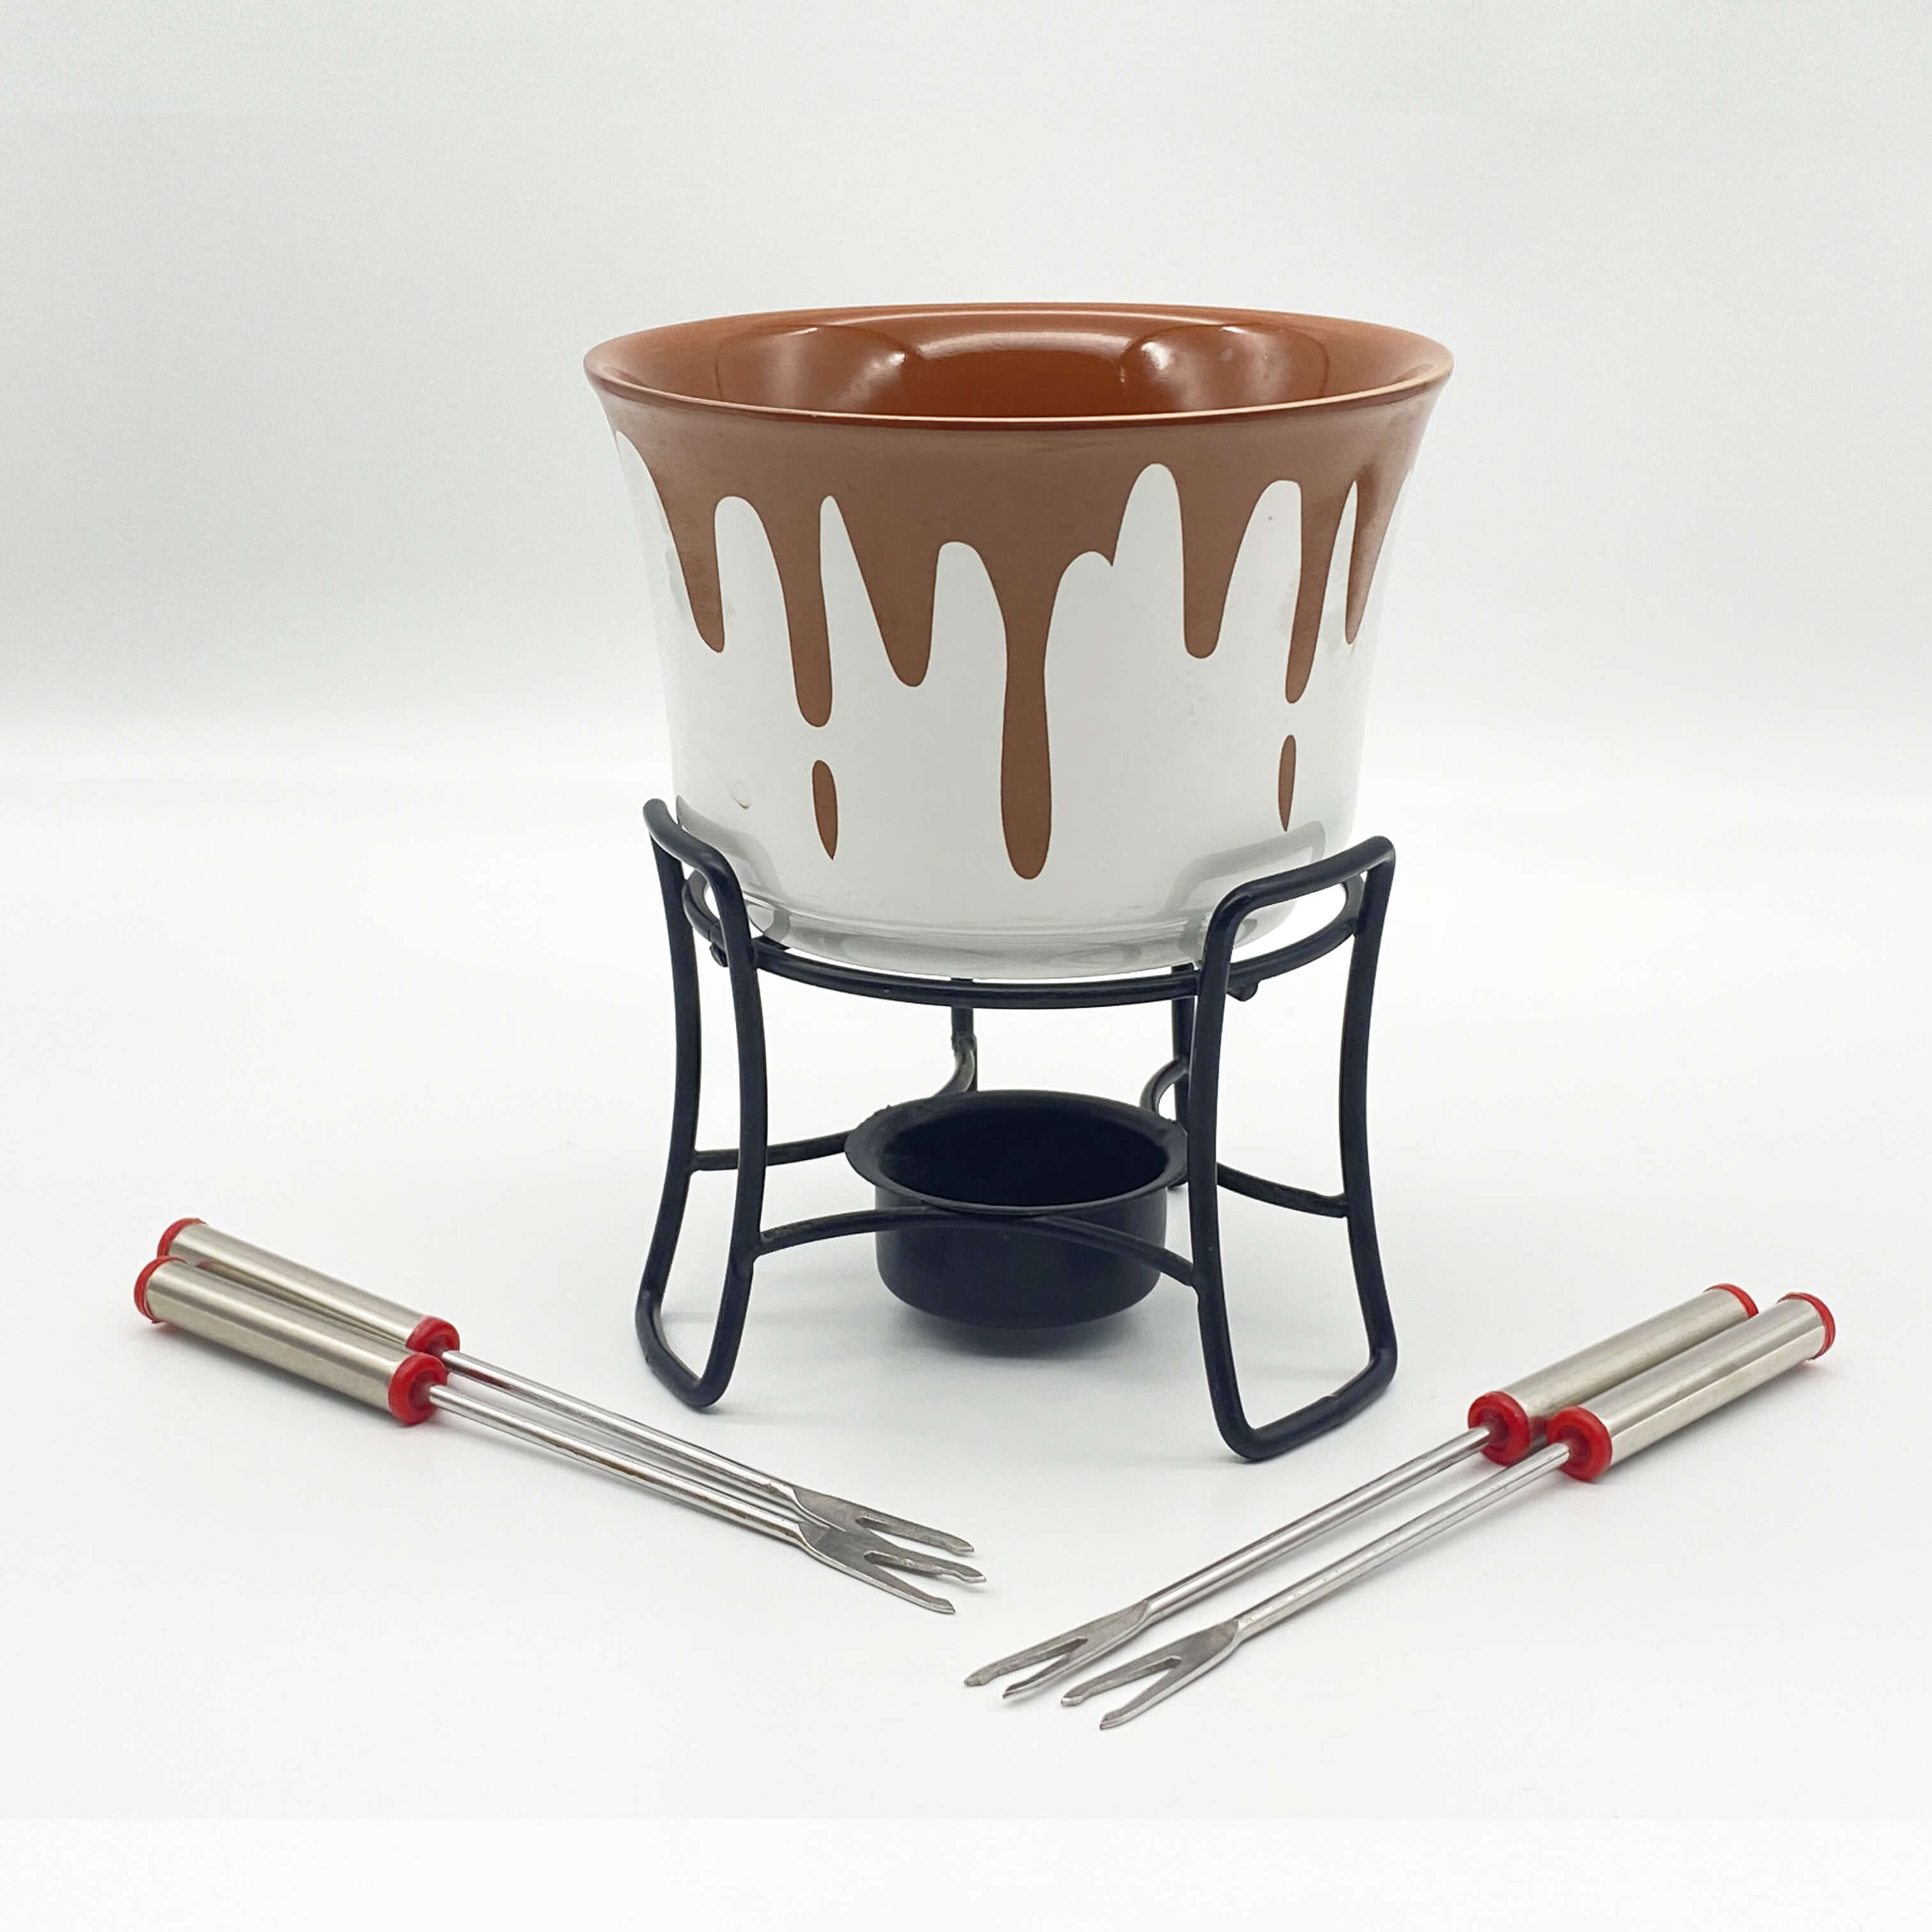 Chocolate Fondue Set Waist Closing Bowl with 4 forks